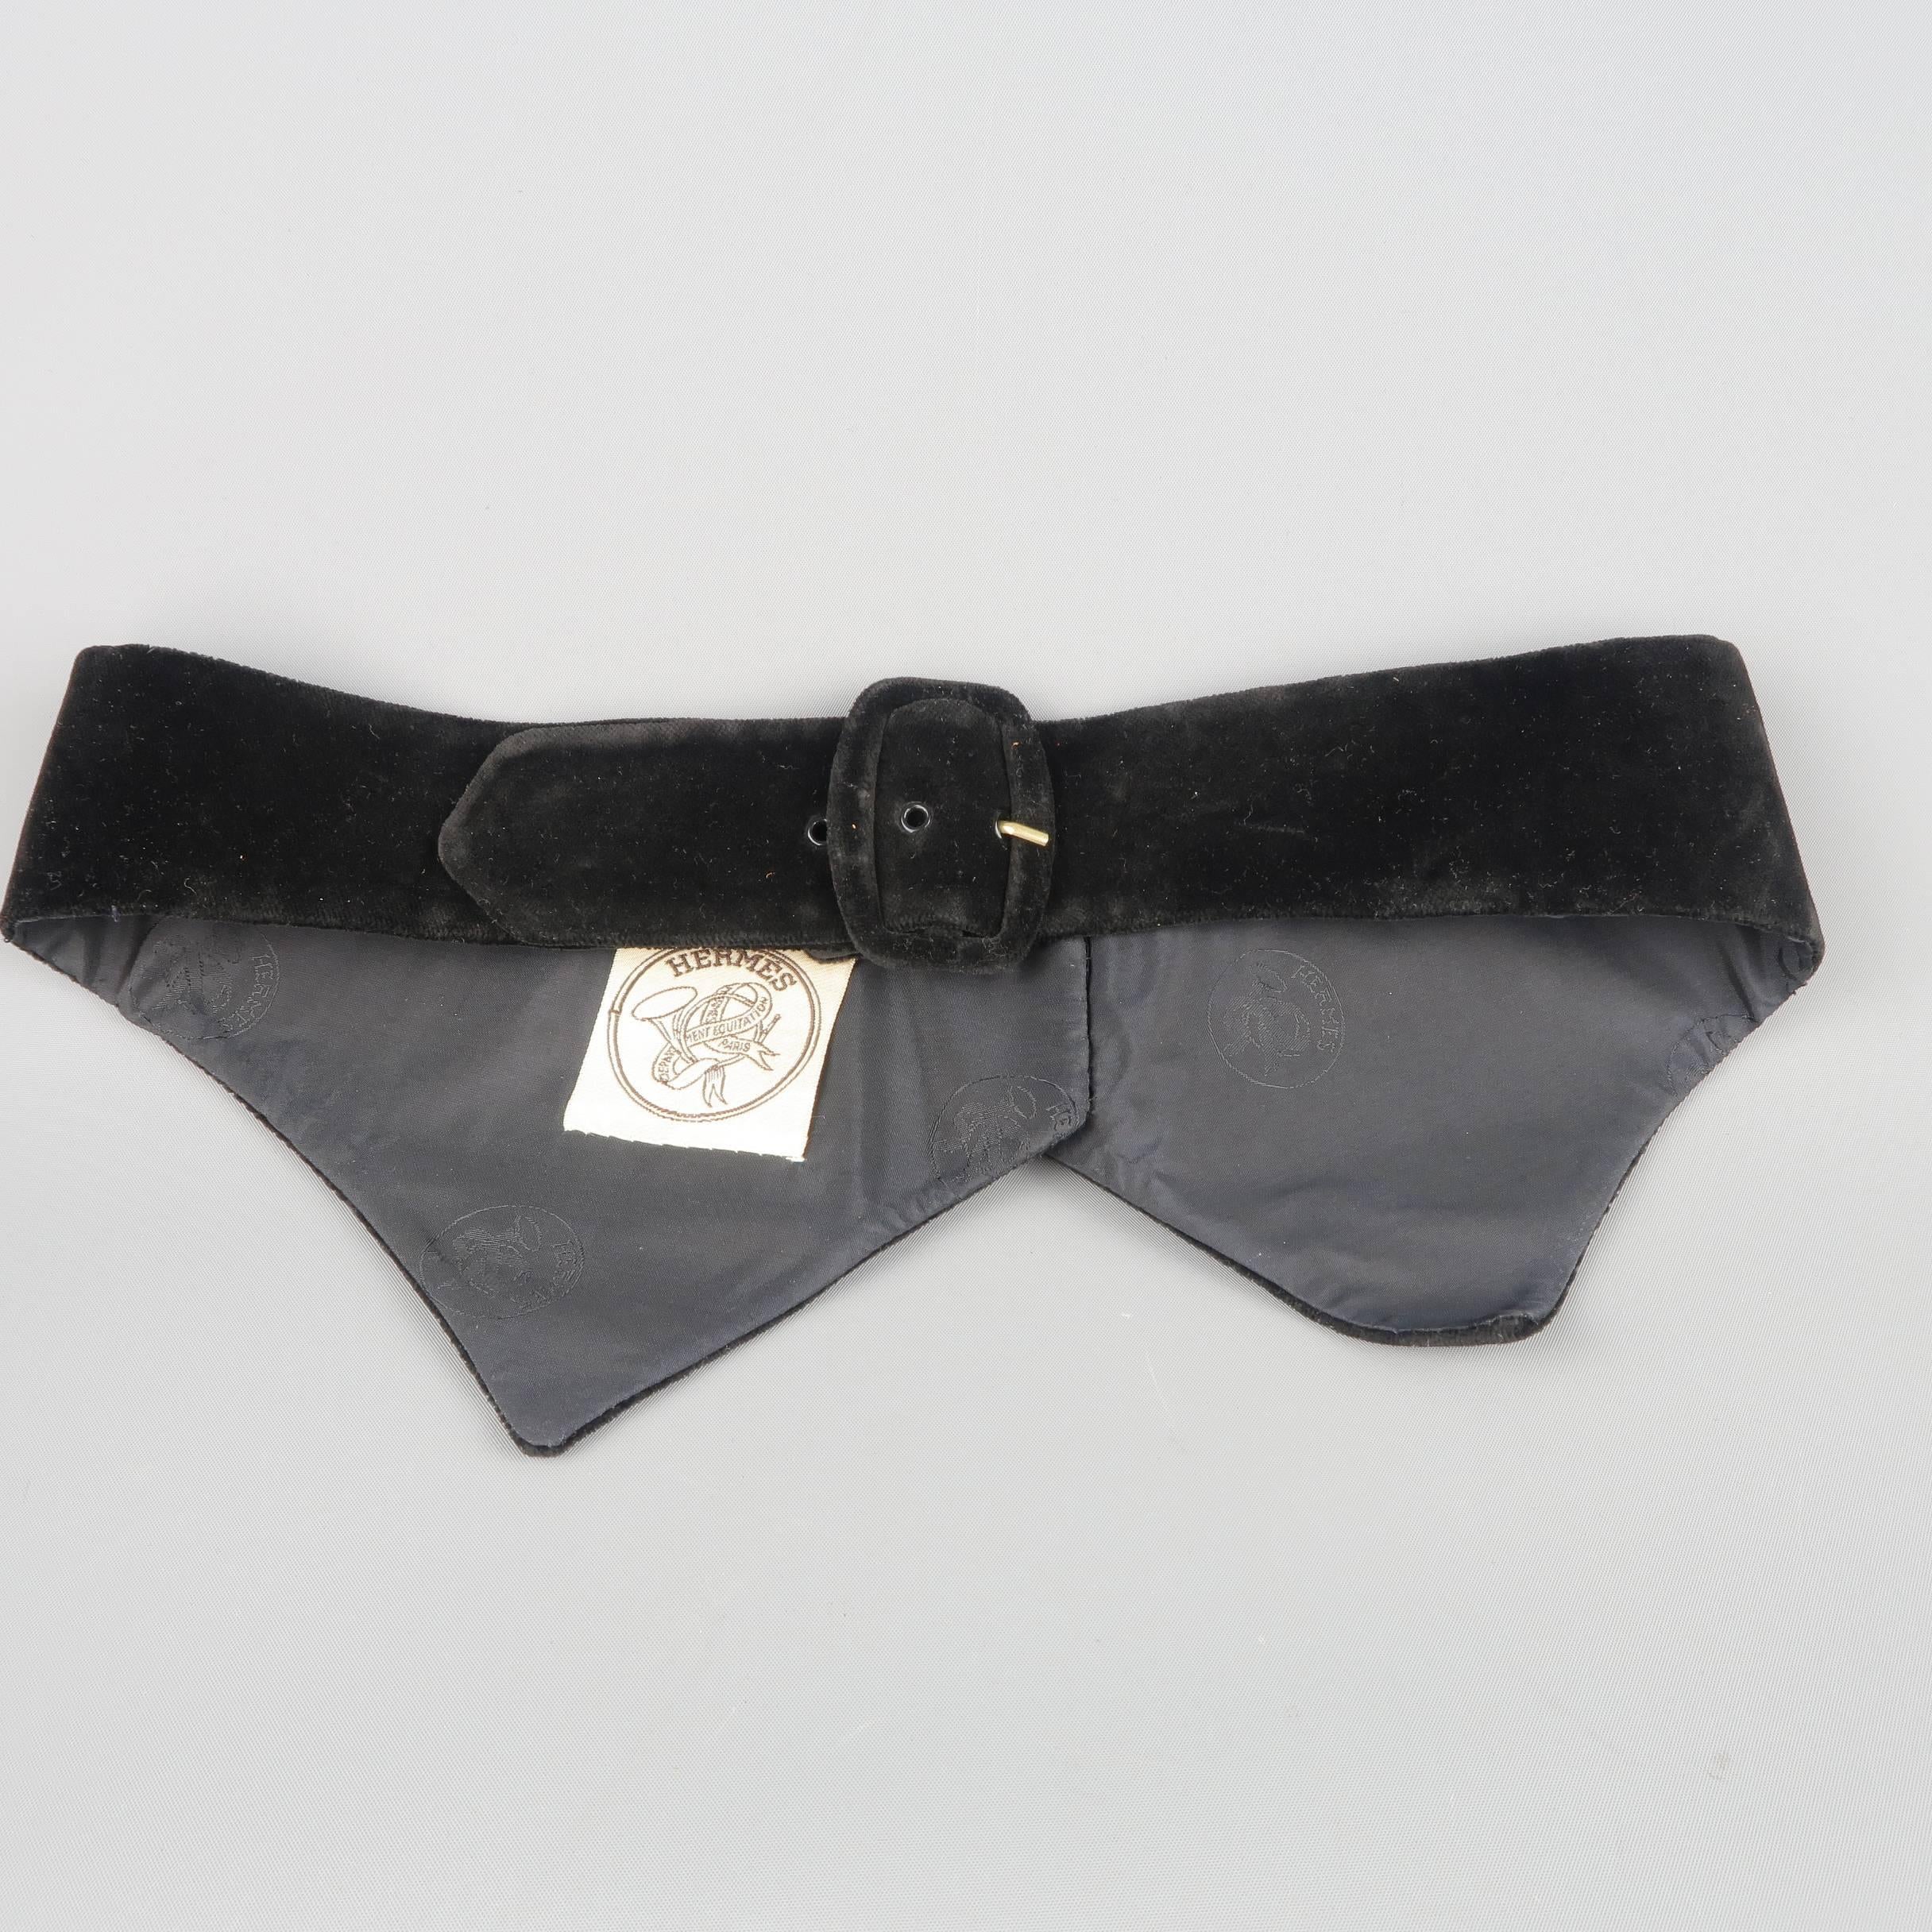 belt with tuxedo